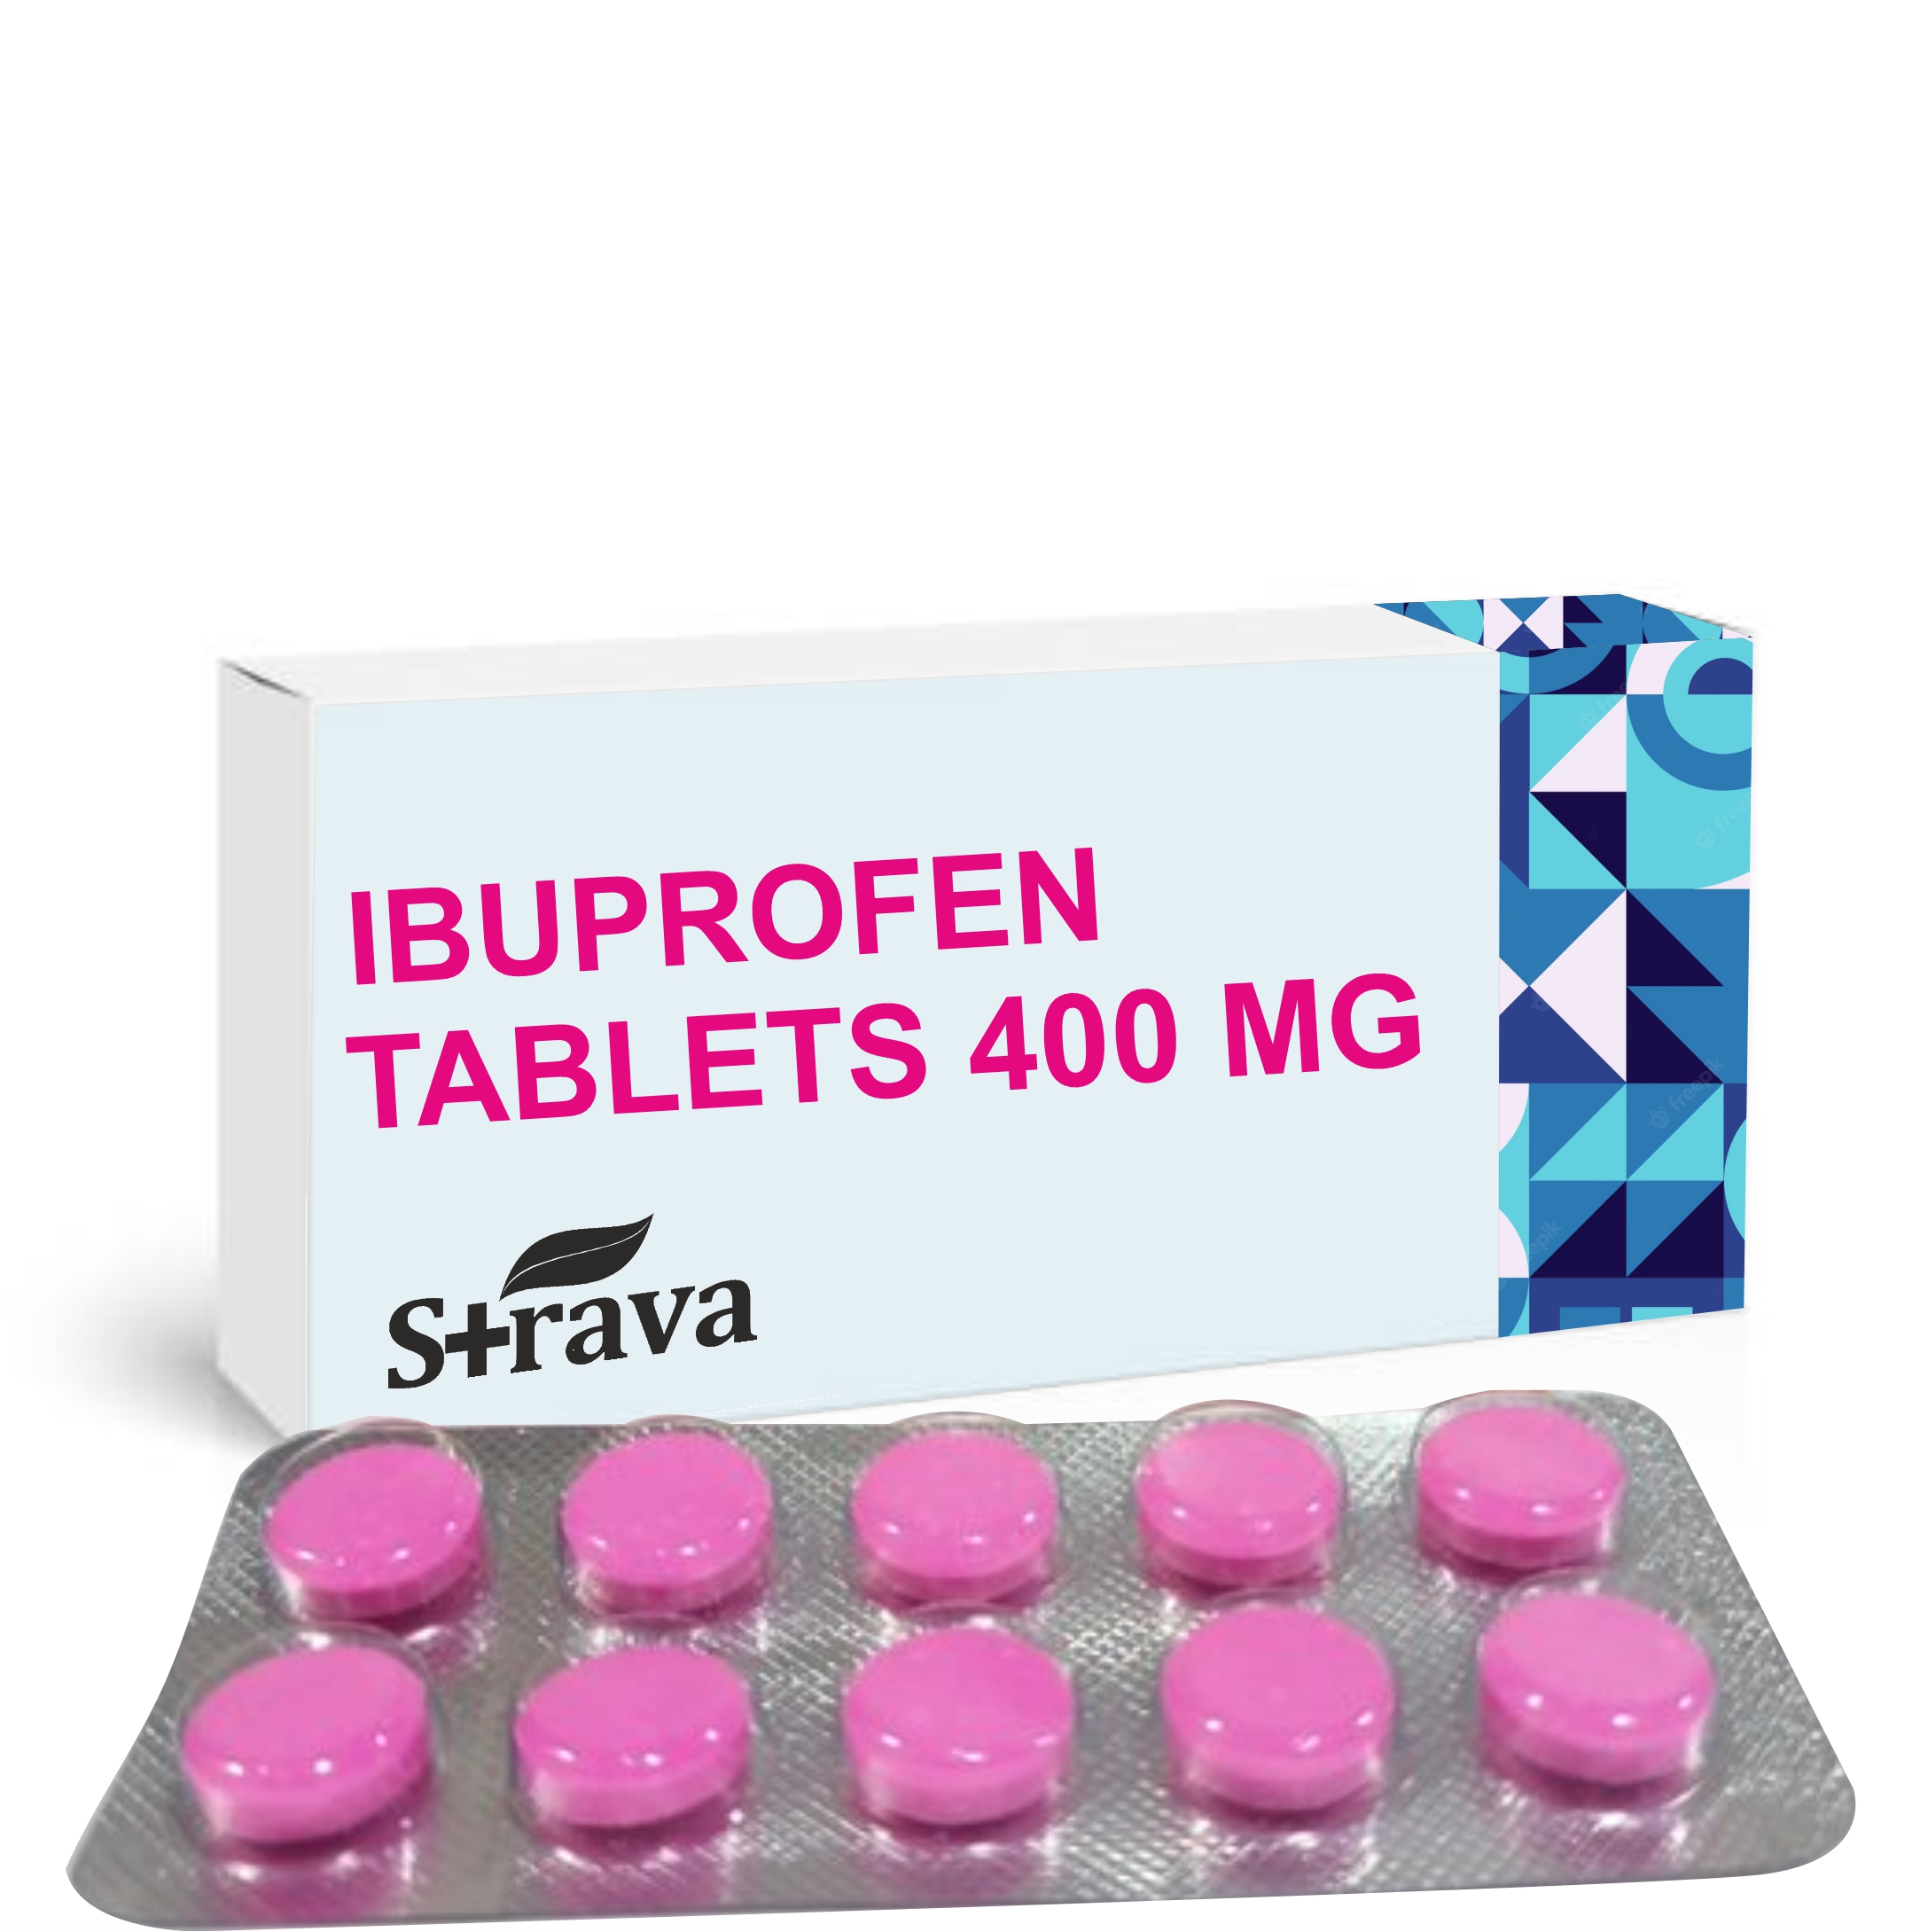 Ibuprofen 400 mg BP Tablets